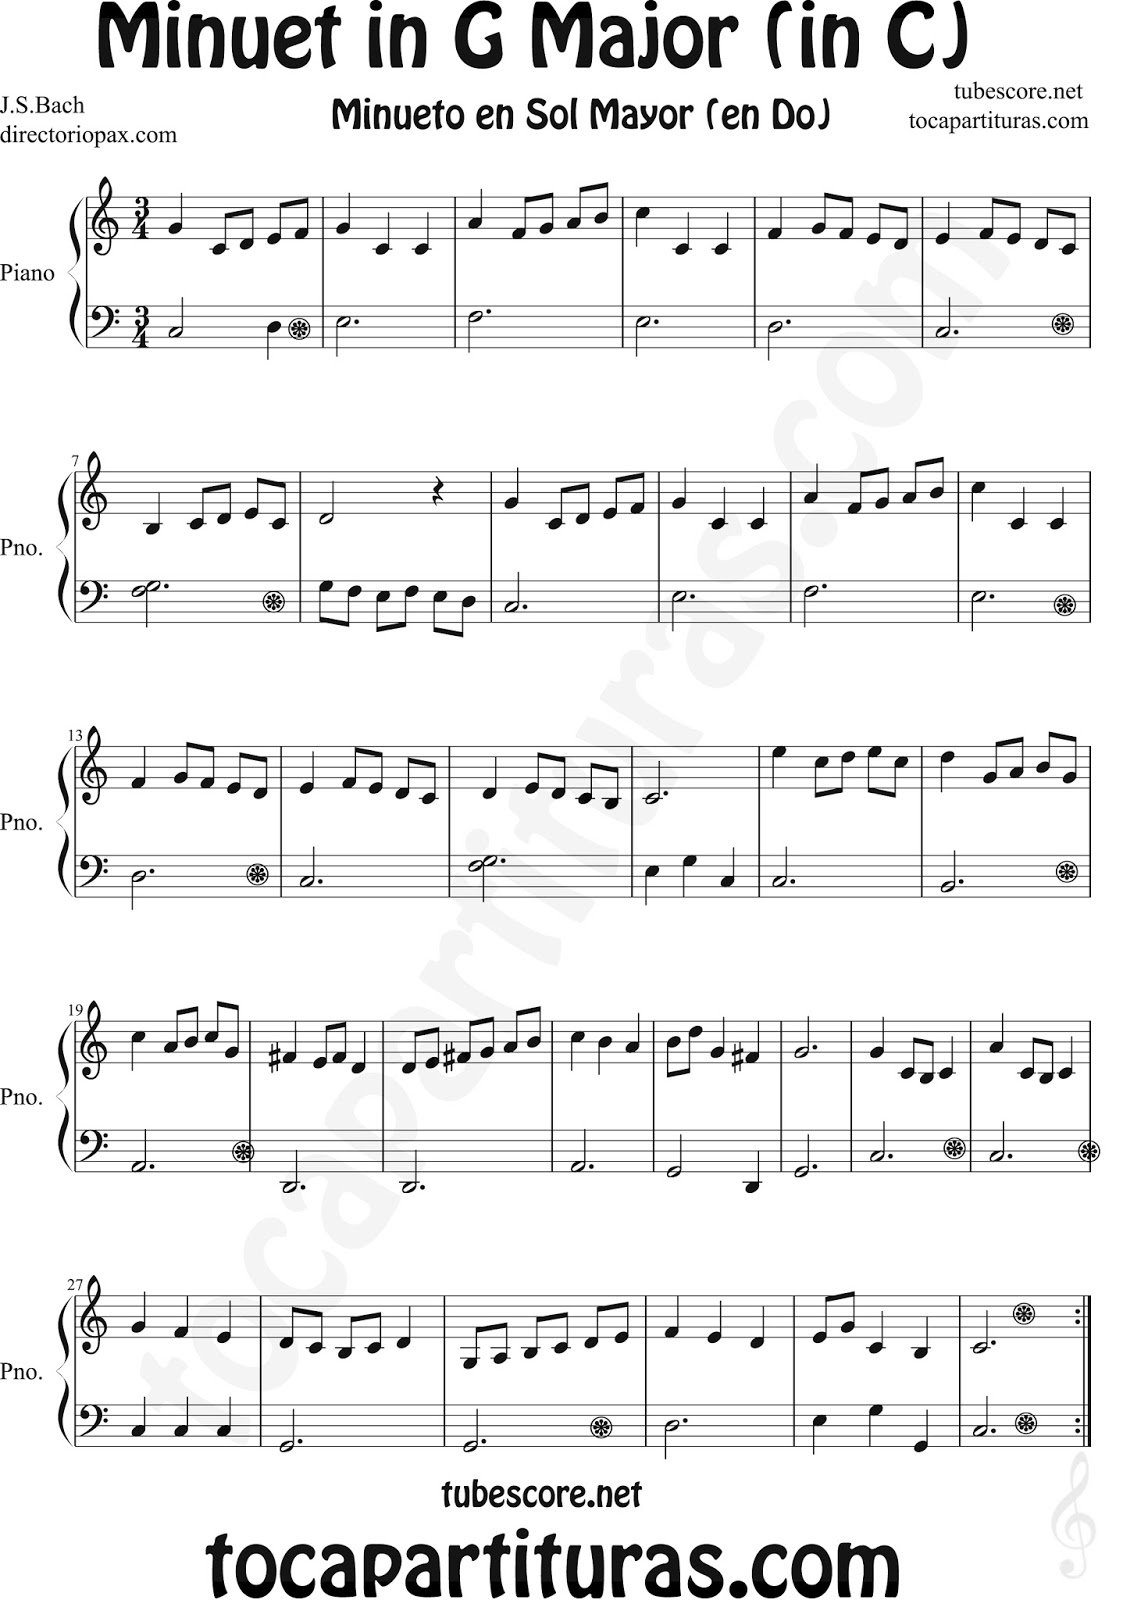 diegosax: Minueto de J.S.Bach en Do (original en Sol M BWV Anh. 114) Partitura de Piano, Flauta, Violín, Saxofón Alto, Trompeta, Viola, Piano, Oboe, Clarinete, Saxo Tenor, Soprano Sax, Trombón,